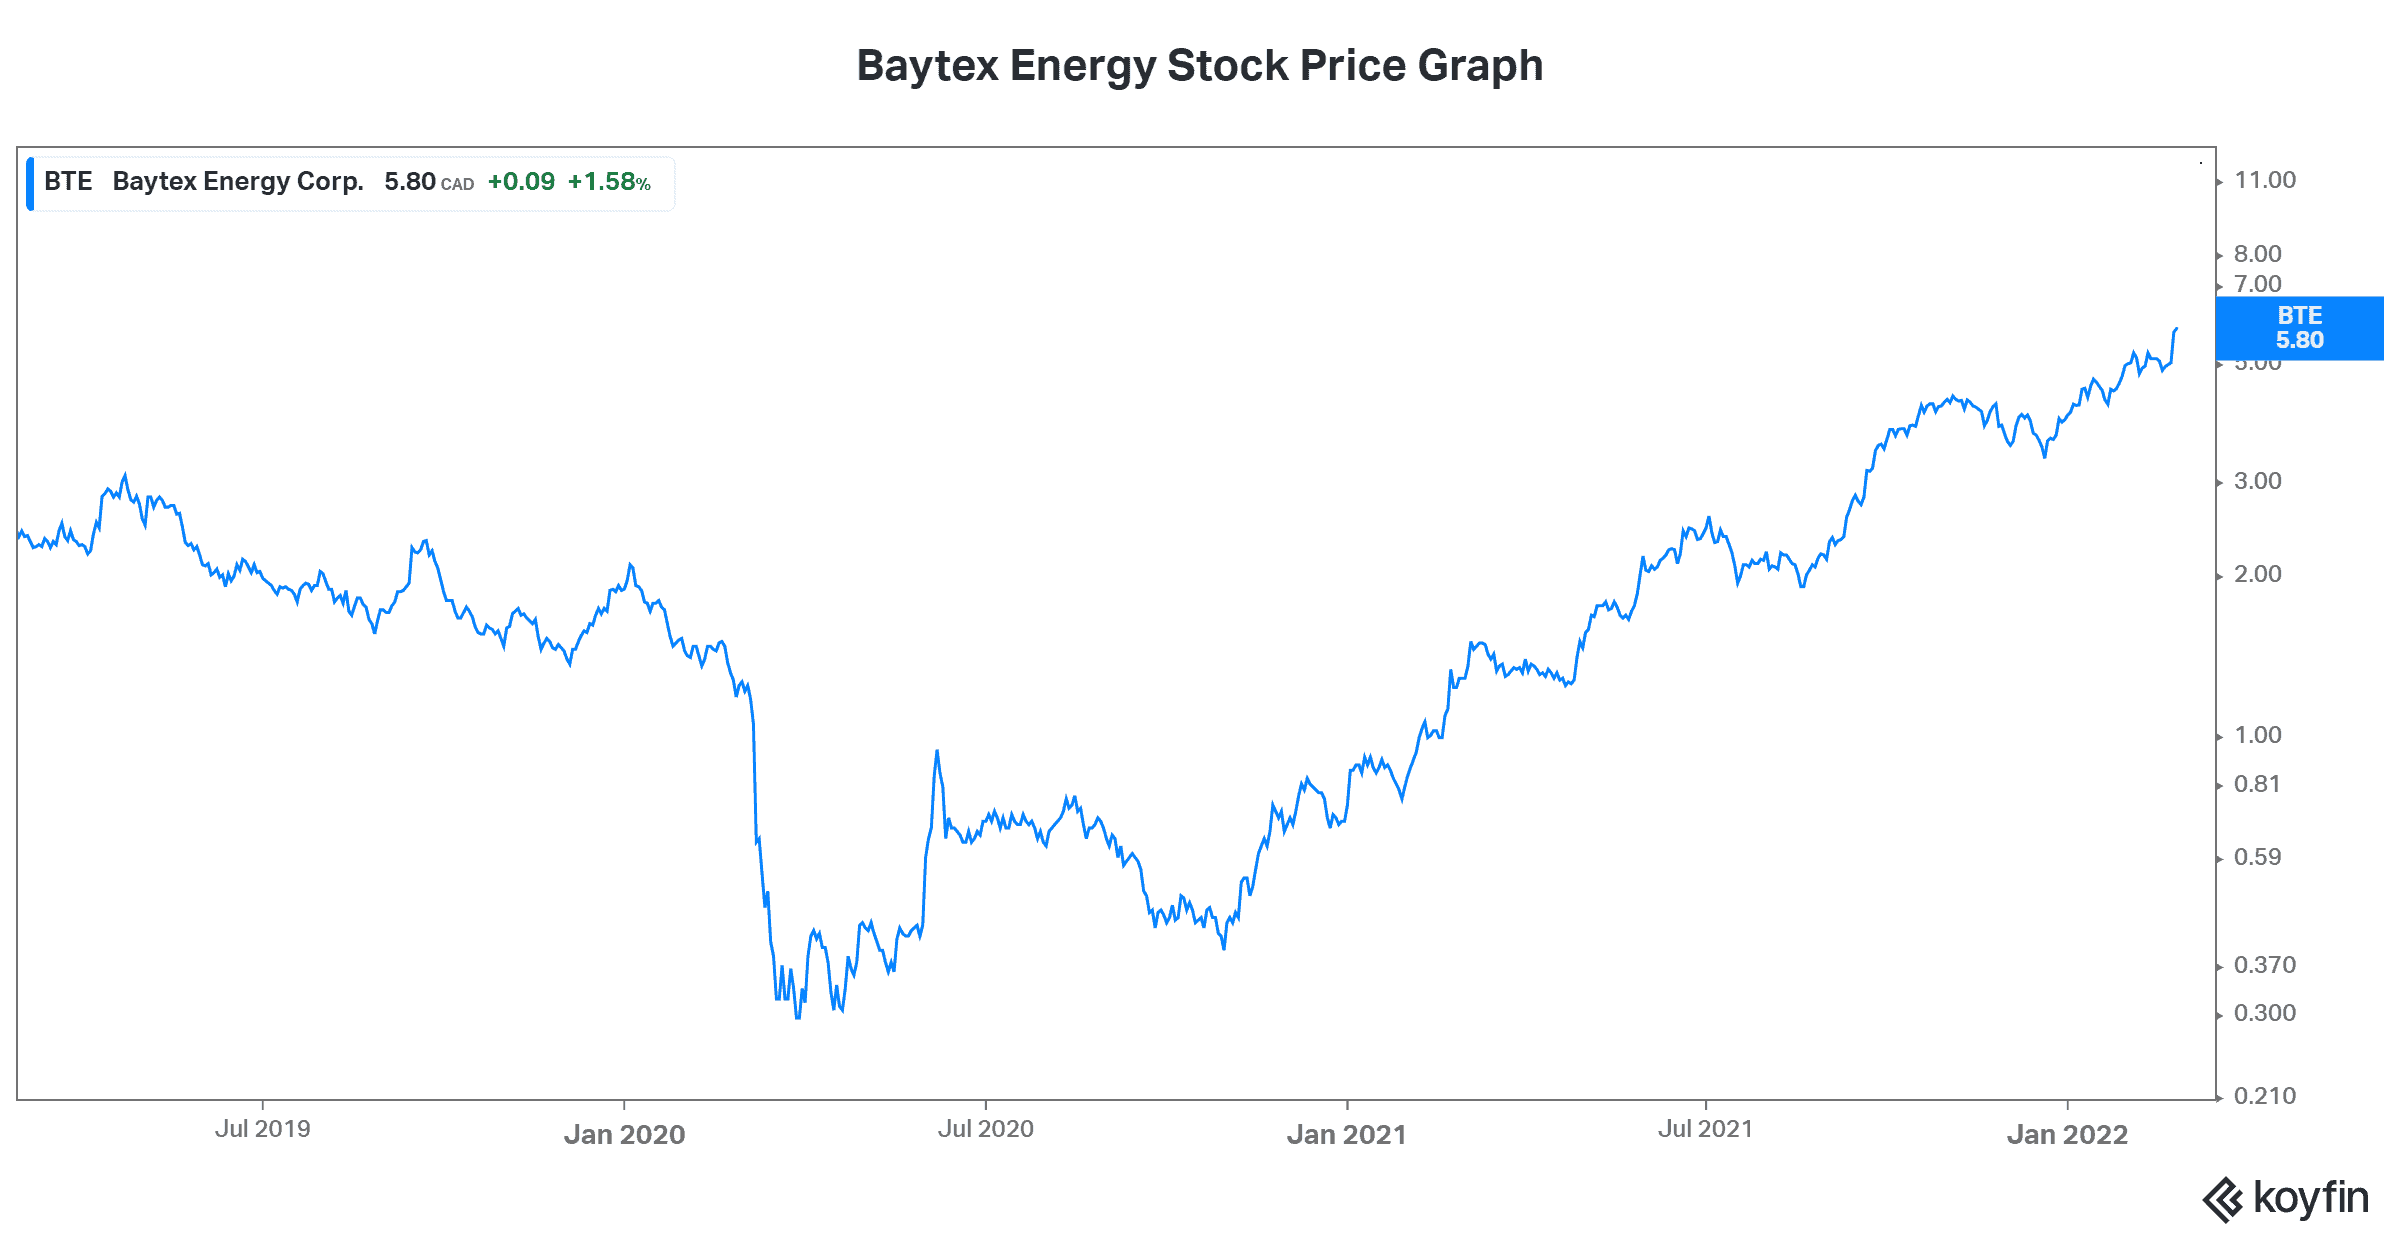 Baytex Energy stock price oil prices